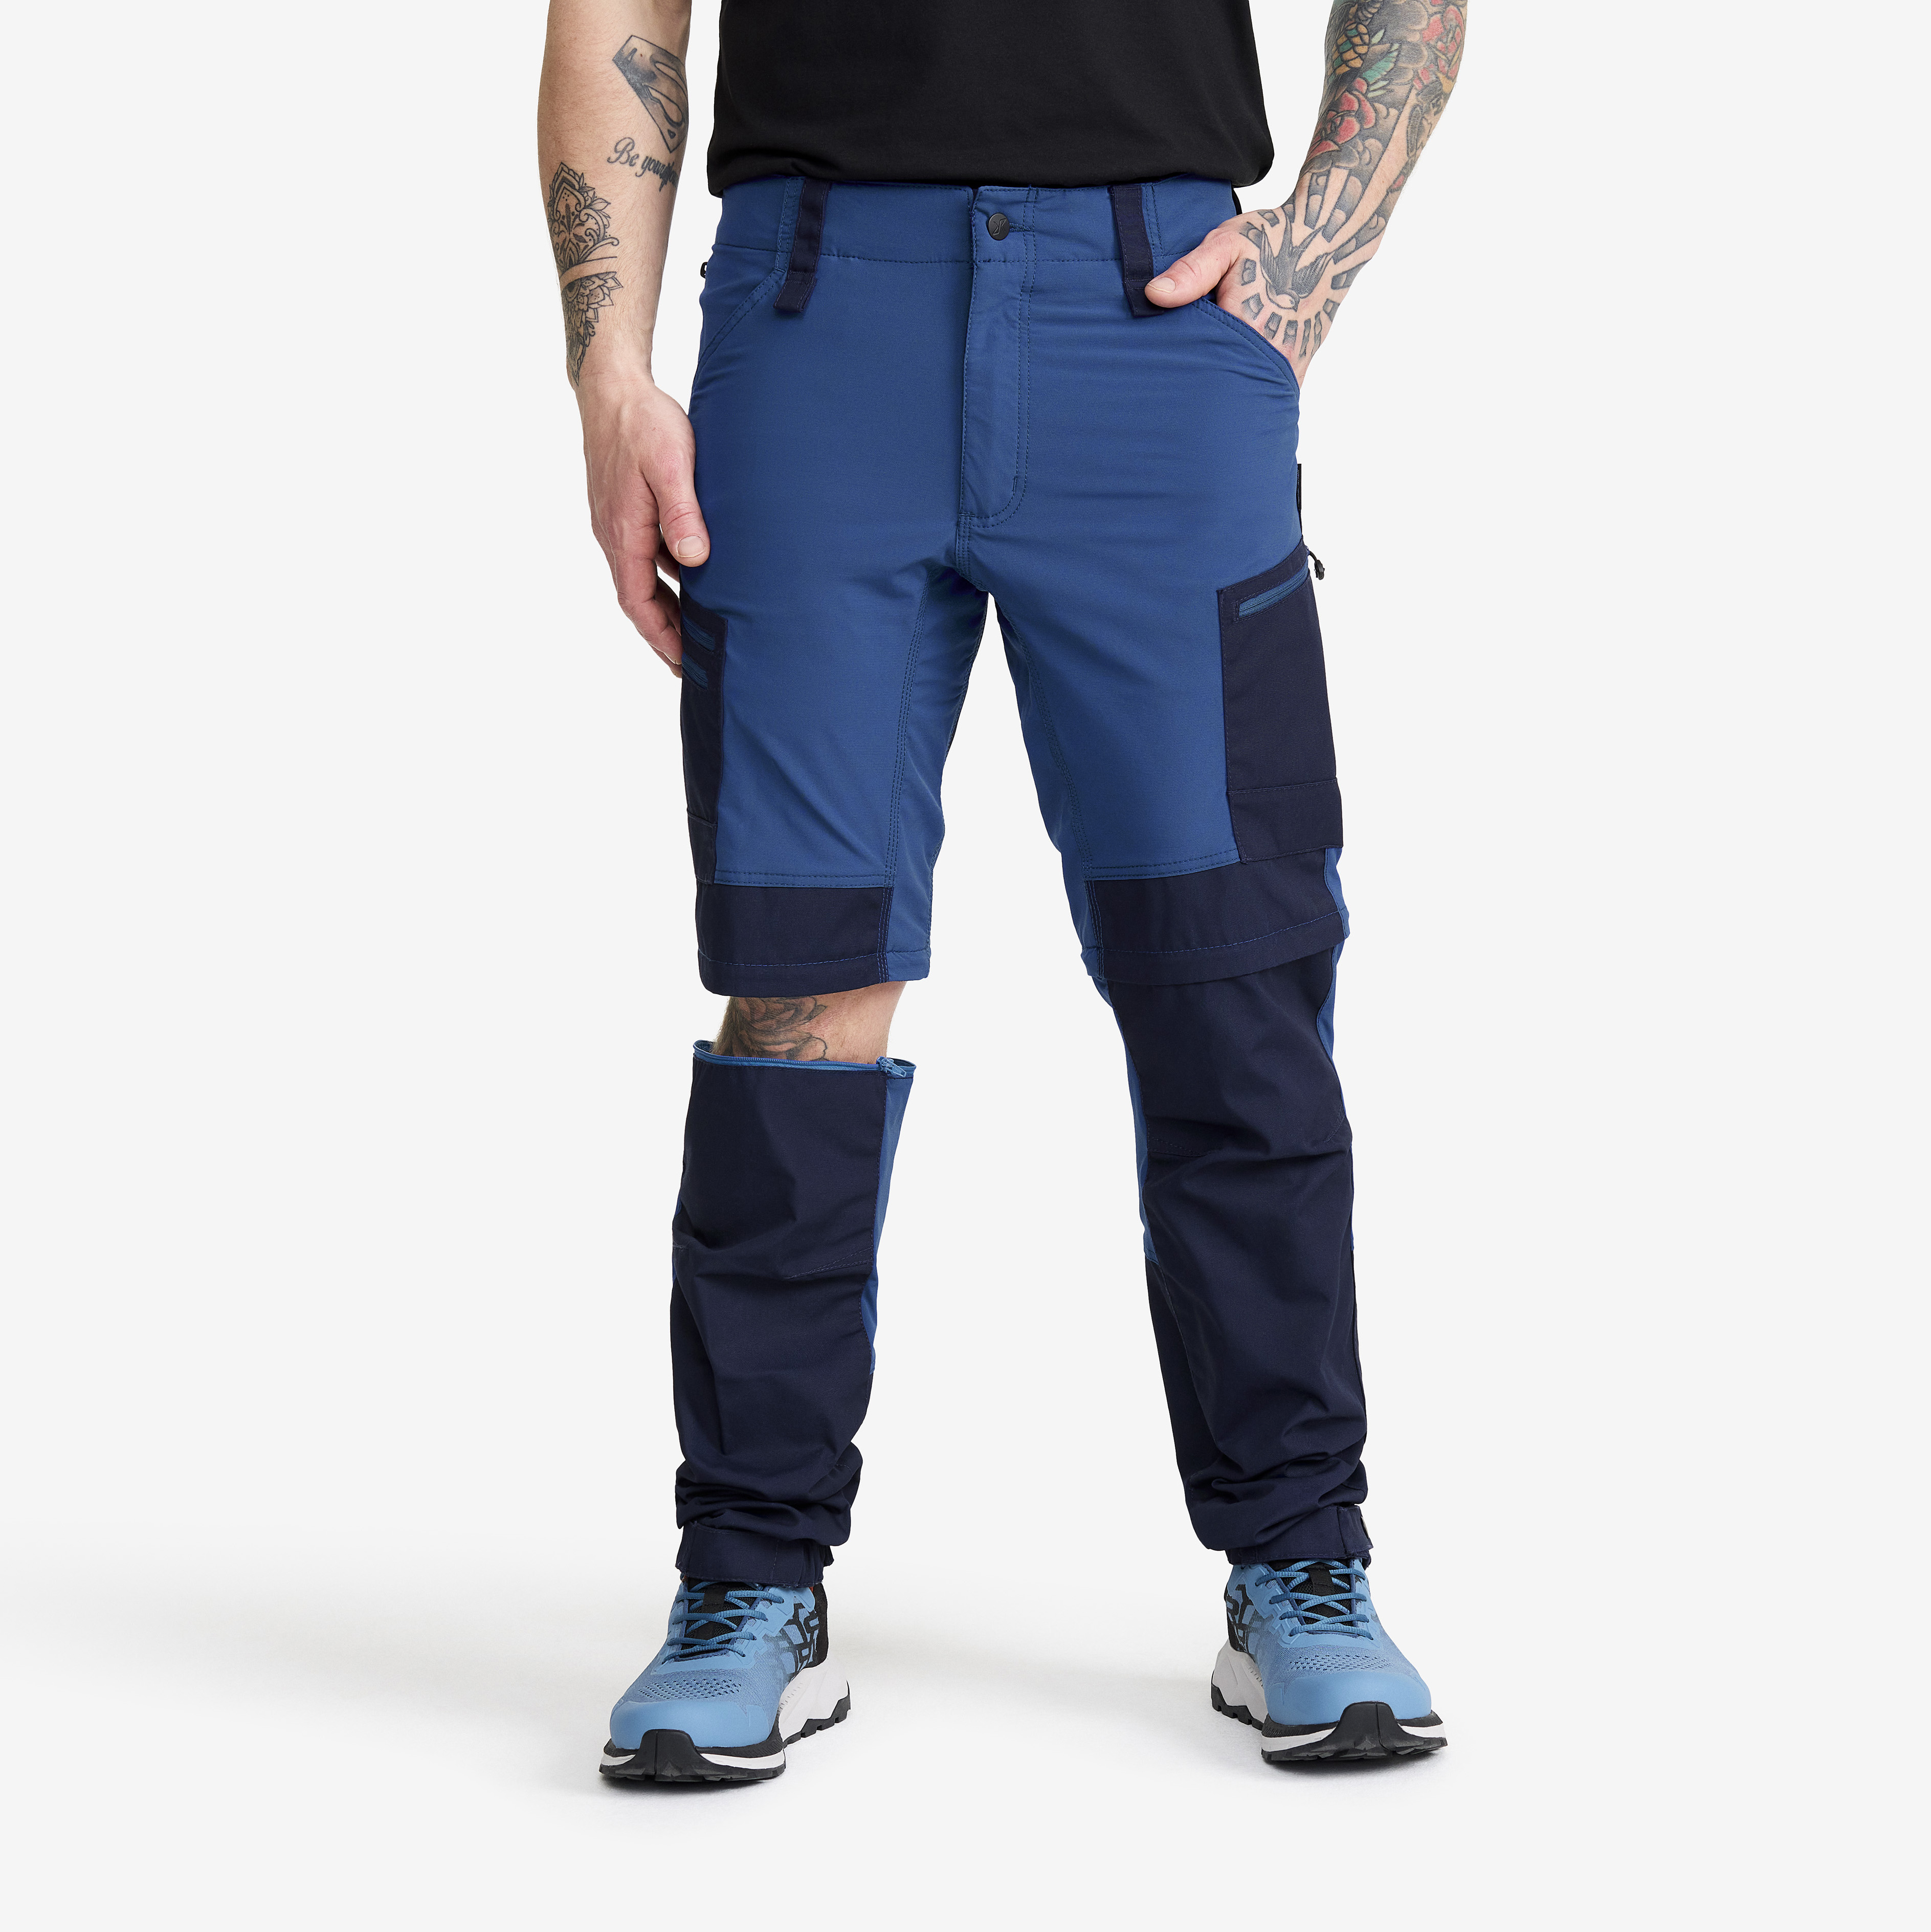 RVRC GP Pro Zip-off hiking trousers for men in dark blue